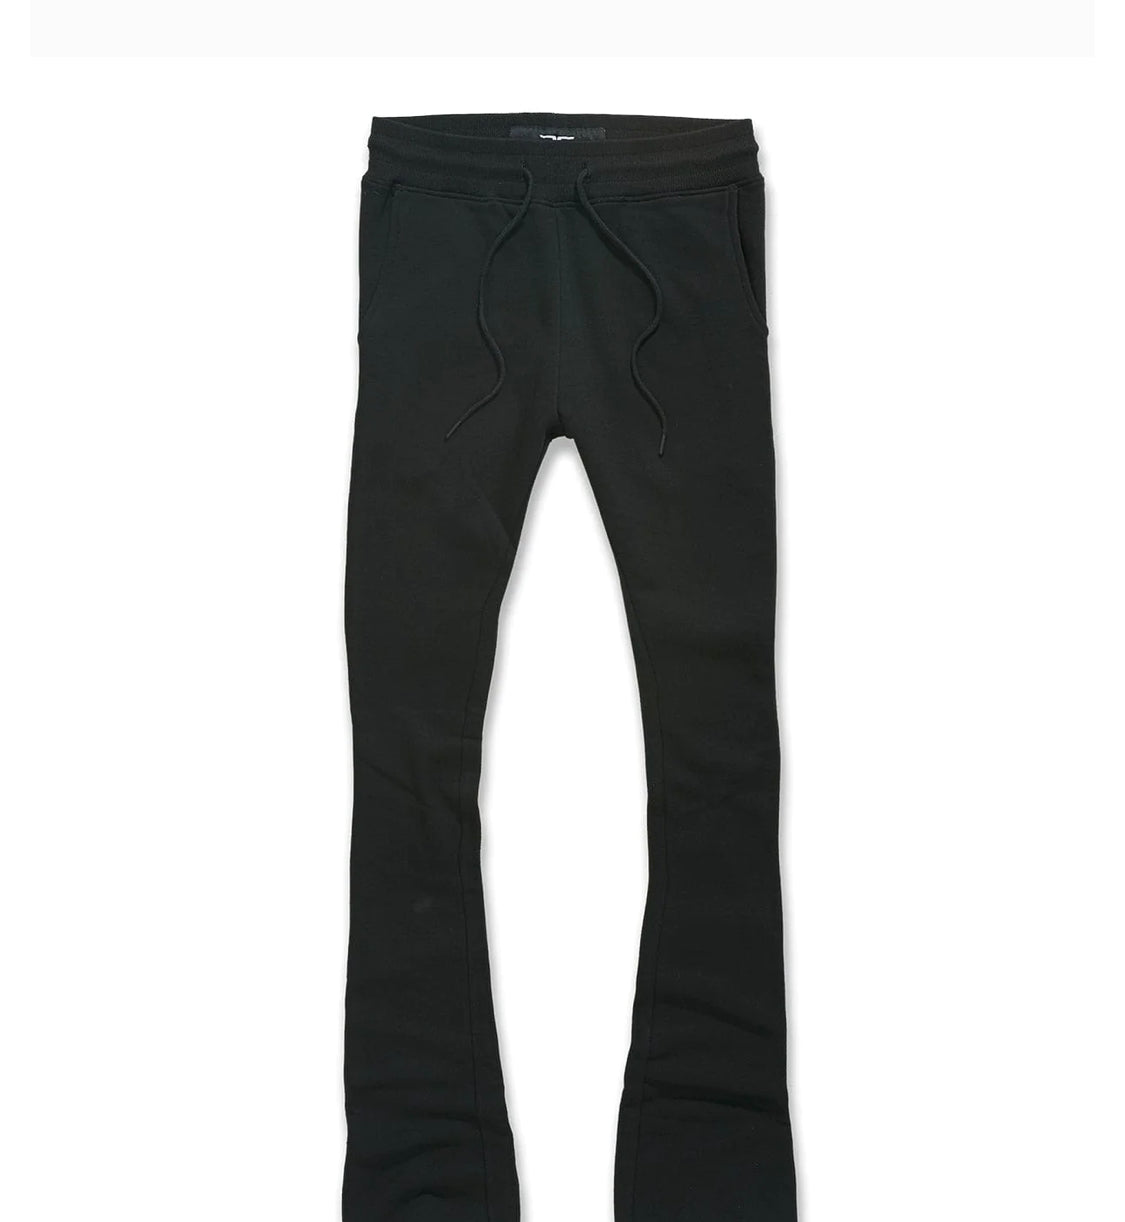 Jordan craig long stack fleece pants Black 8826l